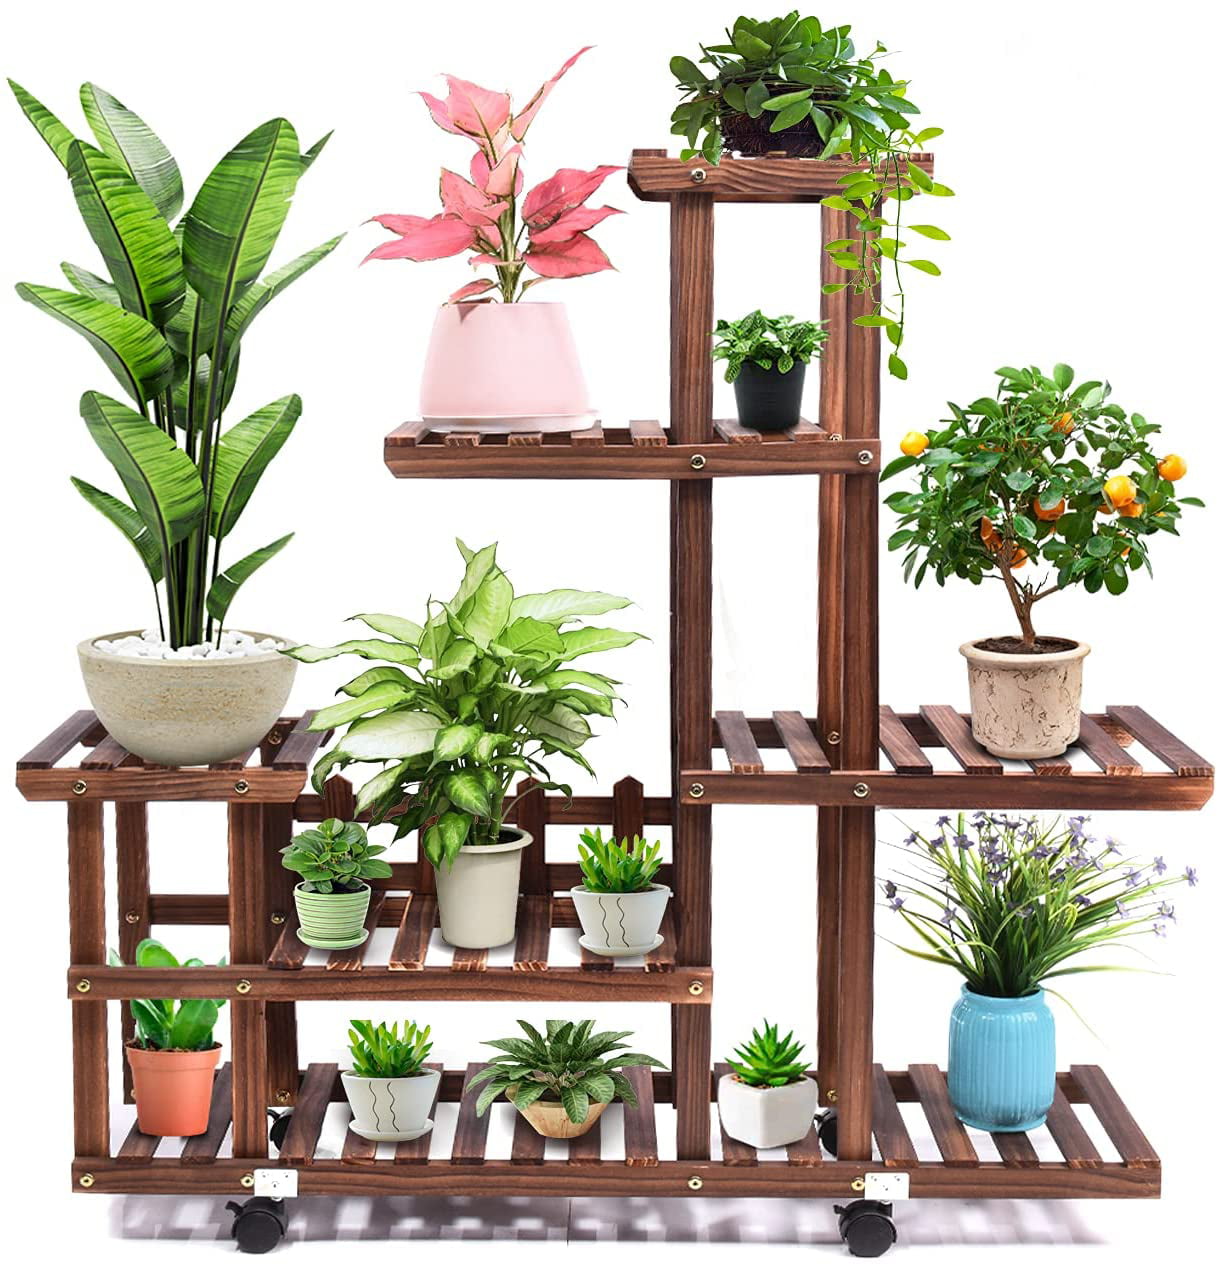 5 Tier Carbonized Plant Shelf Freestanding Flower Pot Holder Plant Display Rack for Indoor Outdoor Patio Garden Balcony Yard Living Room Wood Plant Stand